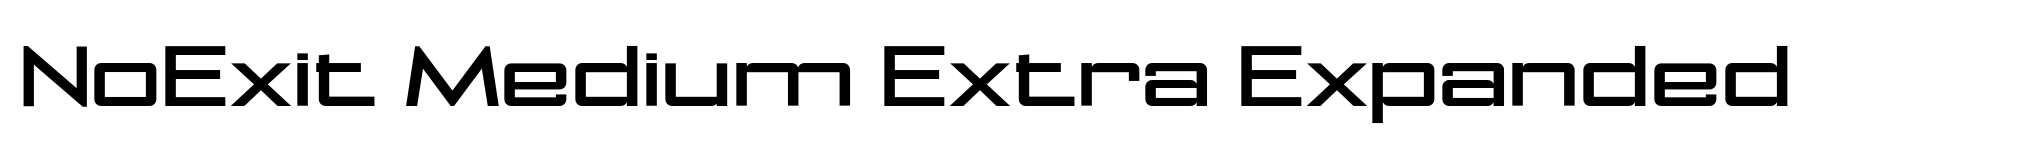 NoExit Medium Extra Expanded image